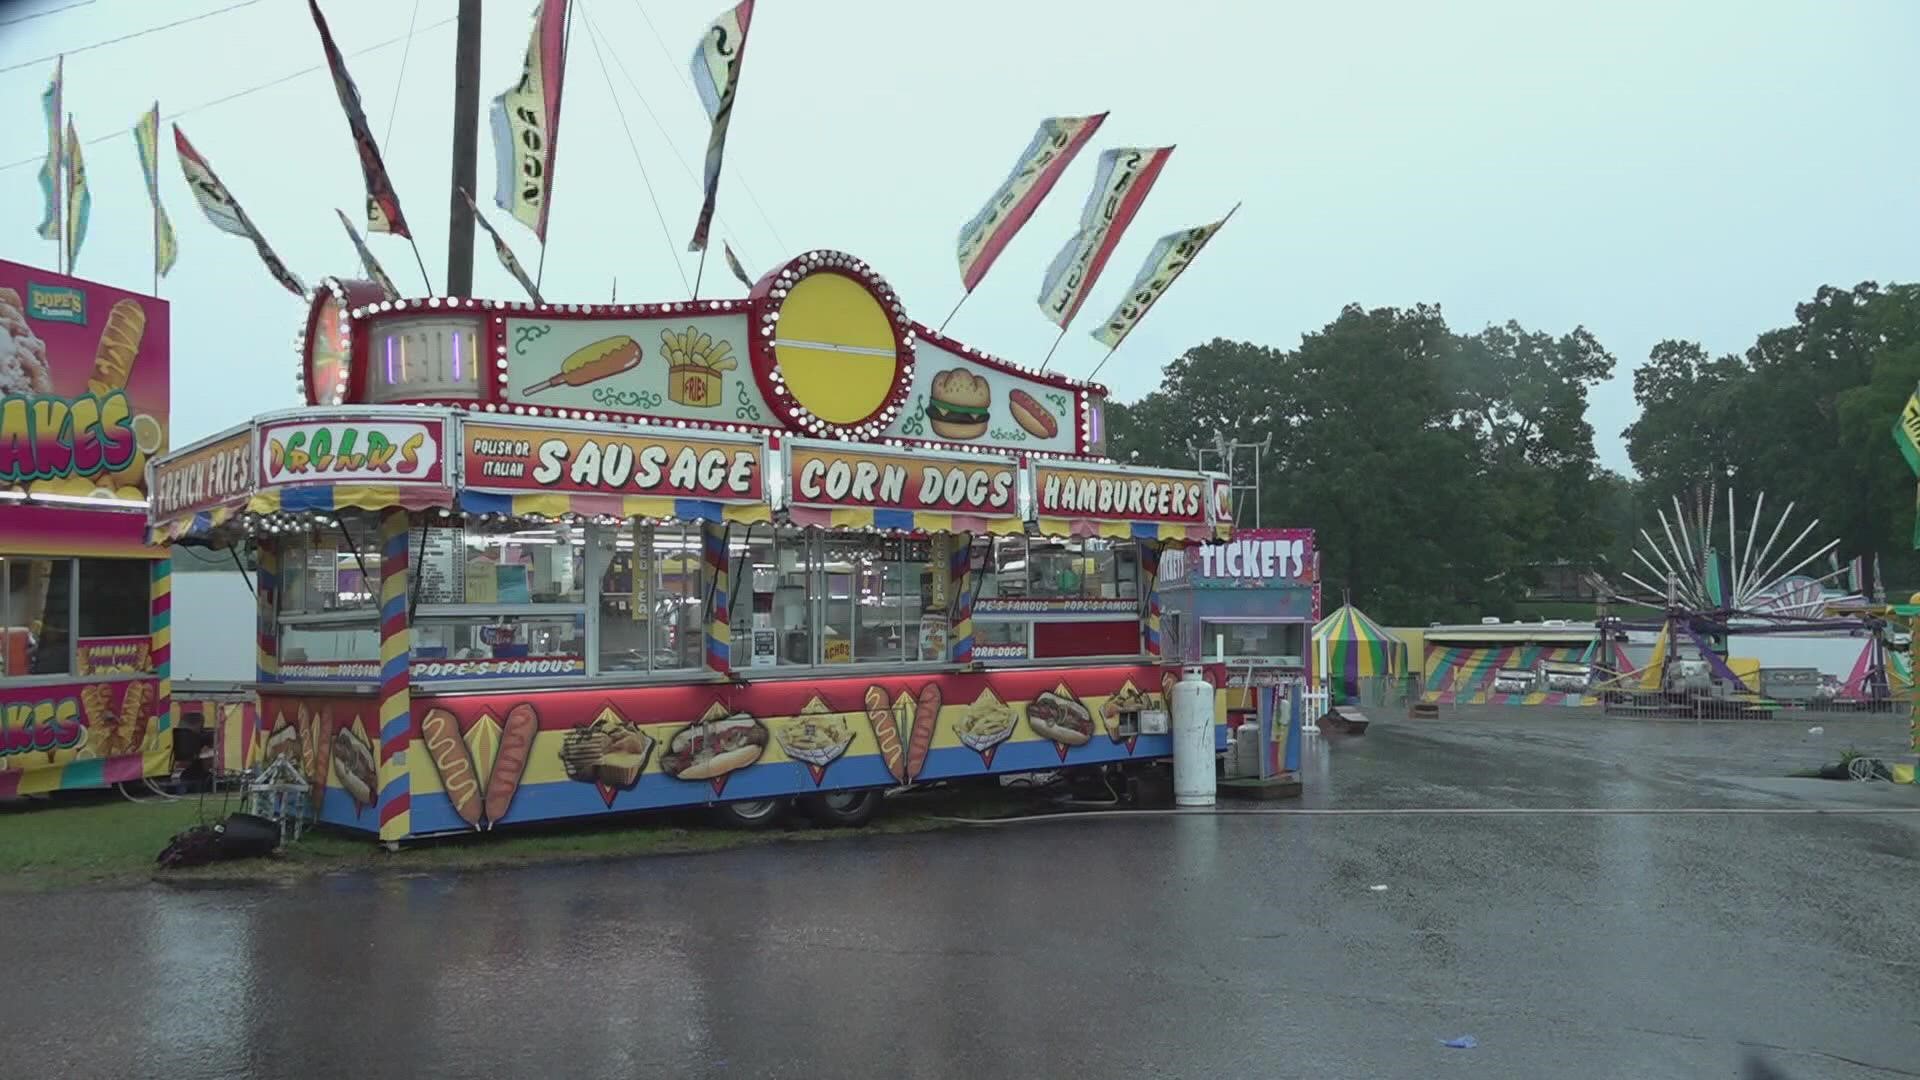 Anderson County Fair visitors despite storm damage the night